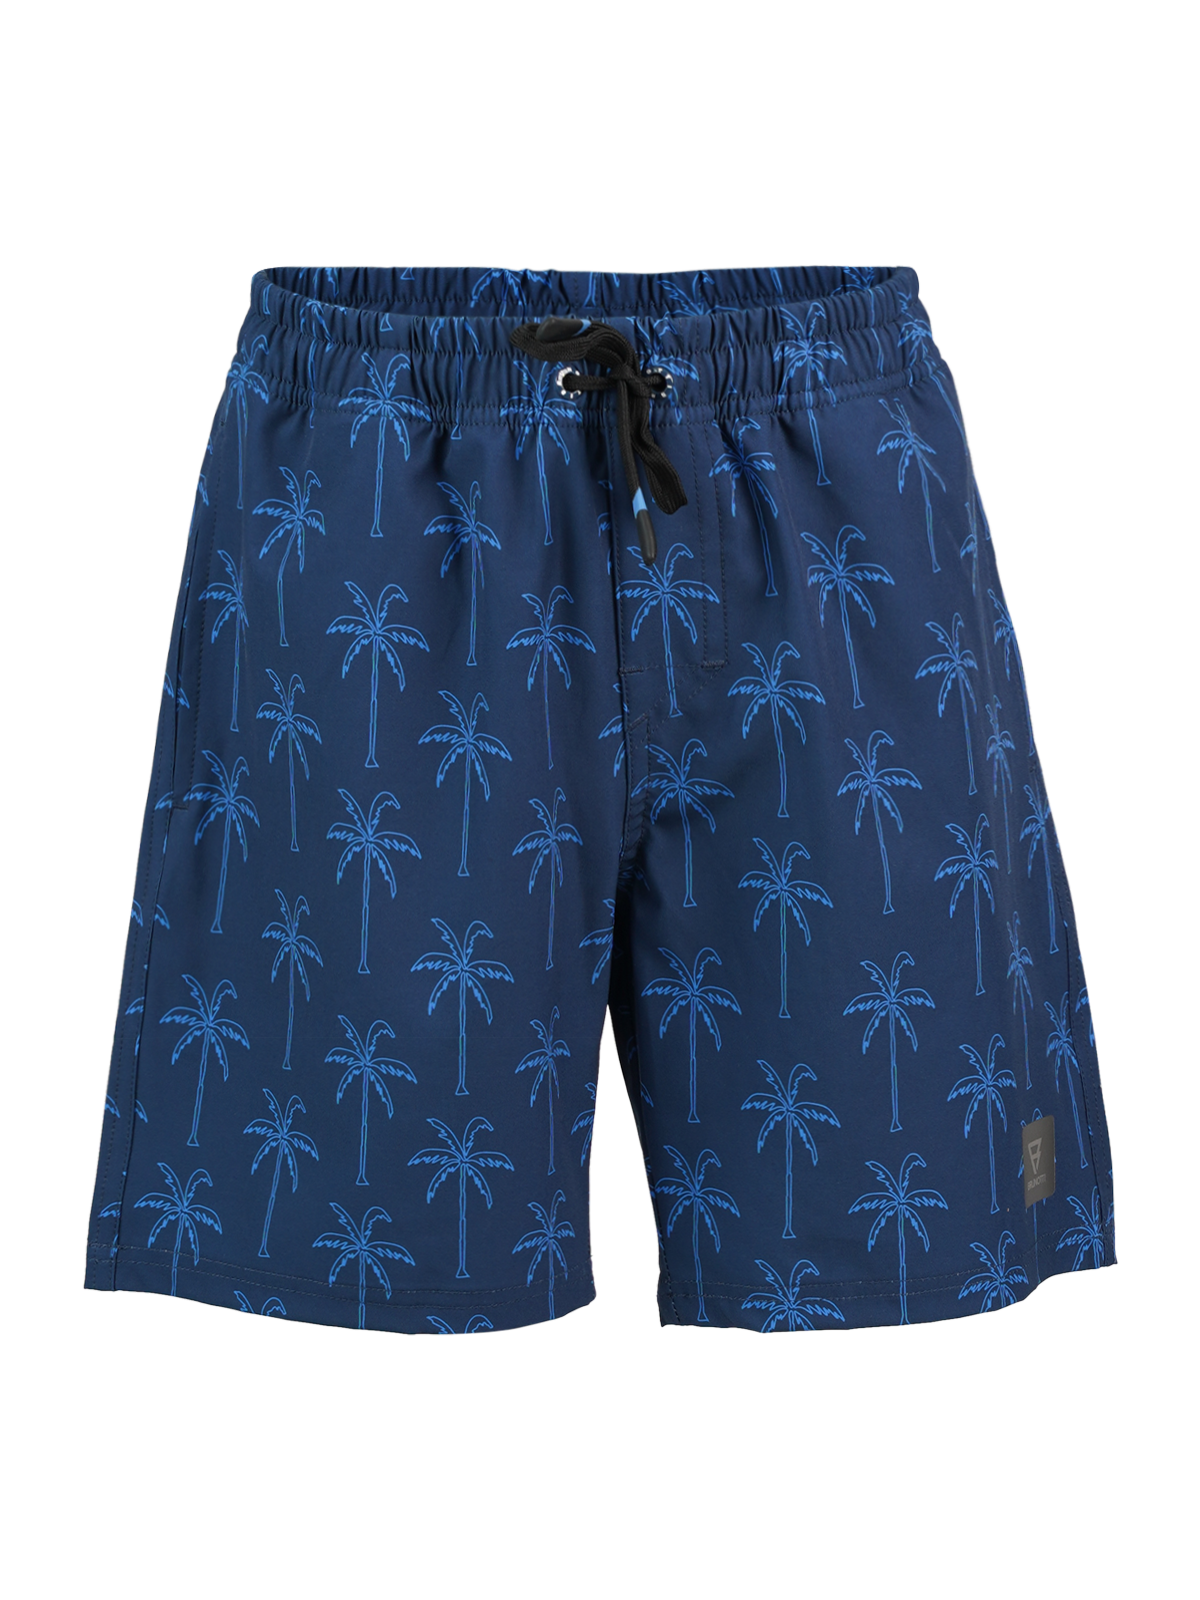 Darminy Boys Swim Shorts | Blue